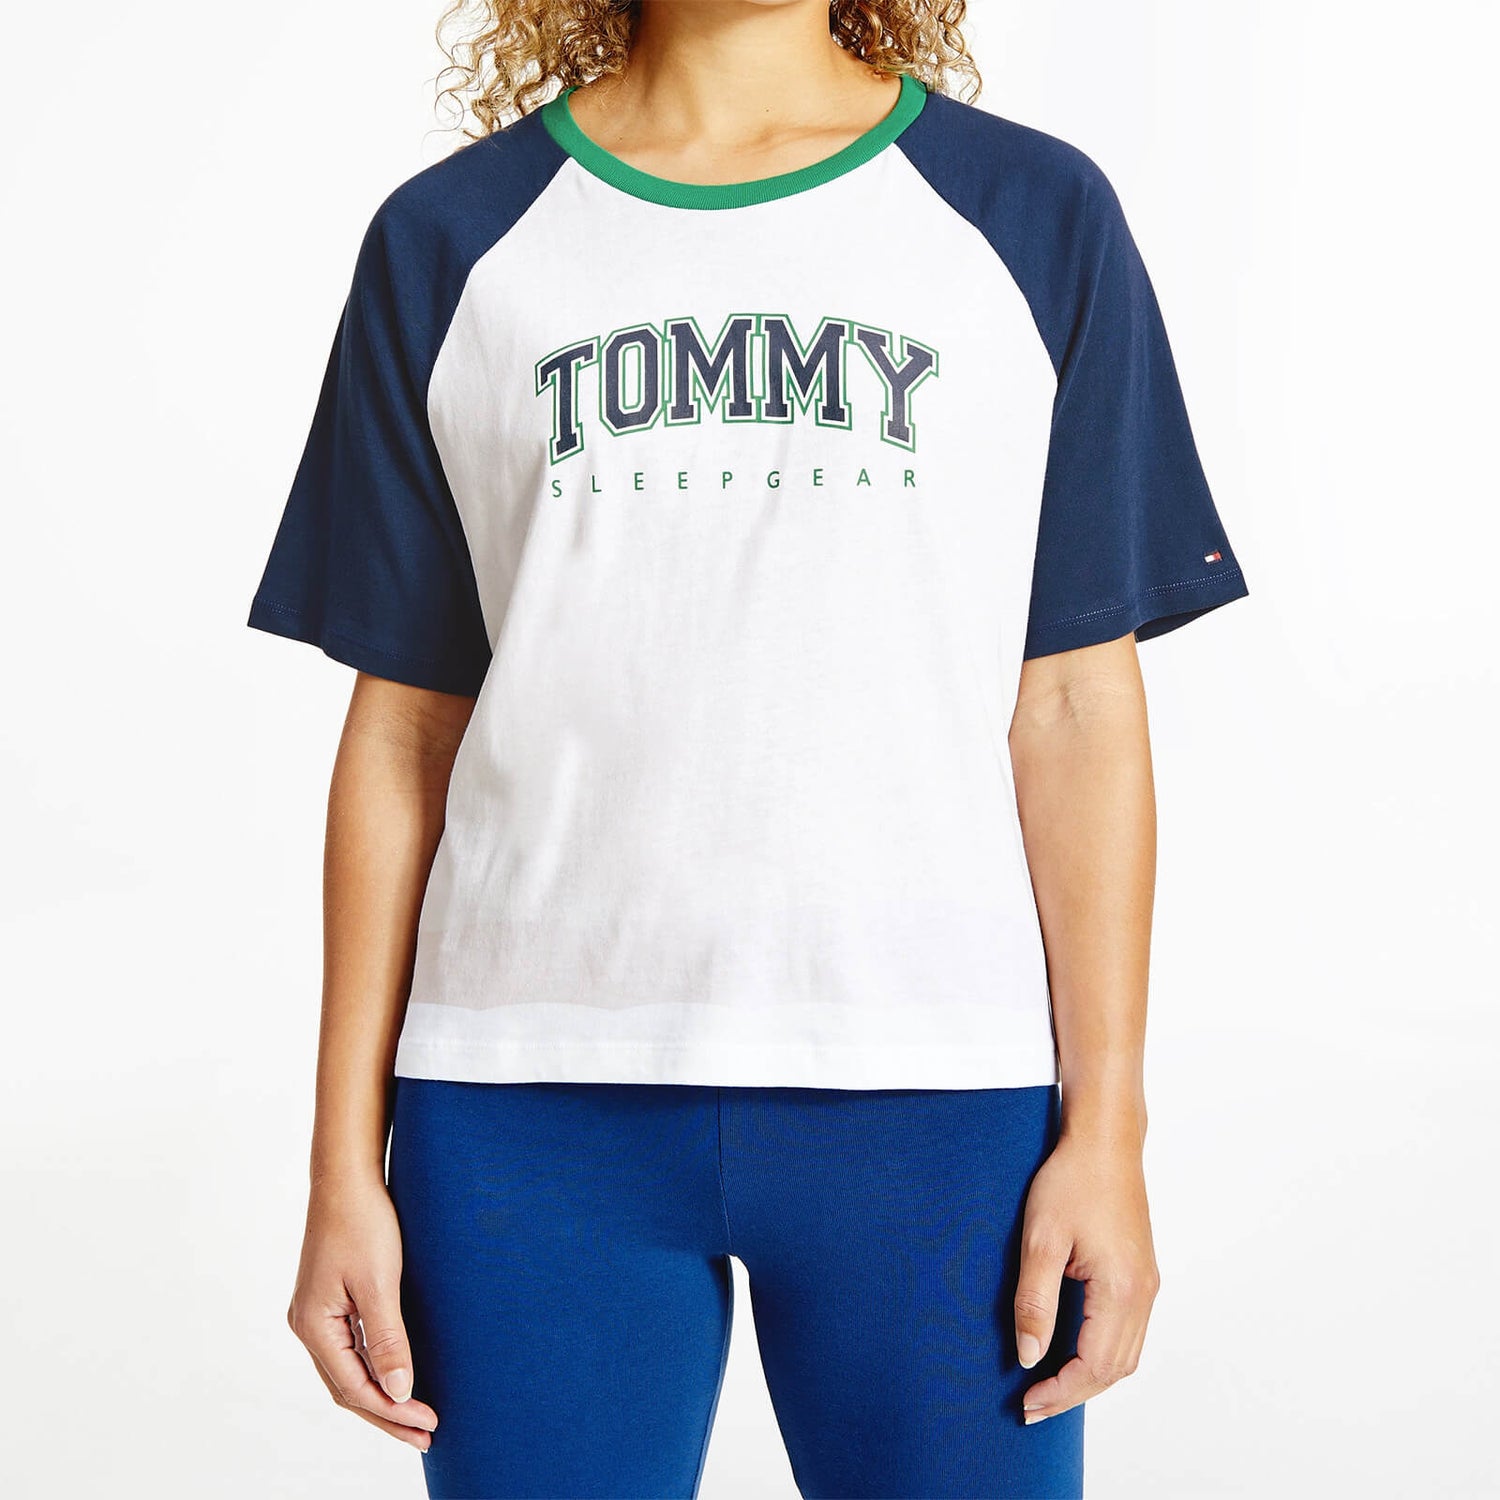 Tommy Hilfiger Women's League Sleep T-Shirt - Twilight Indigo - S